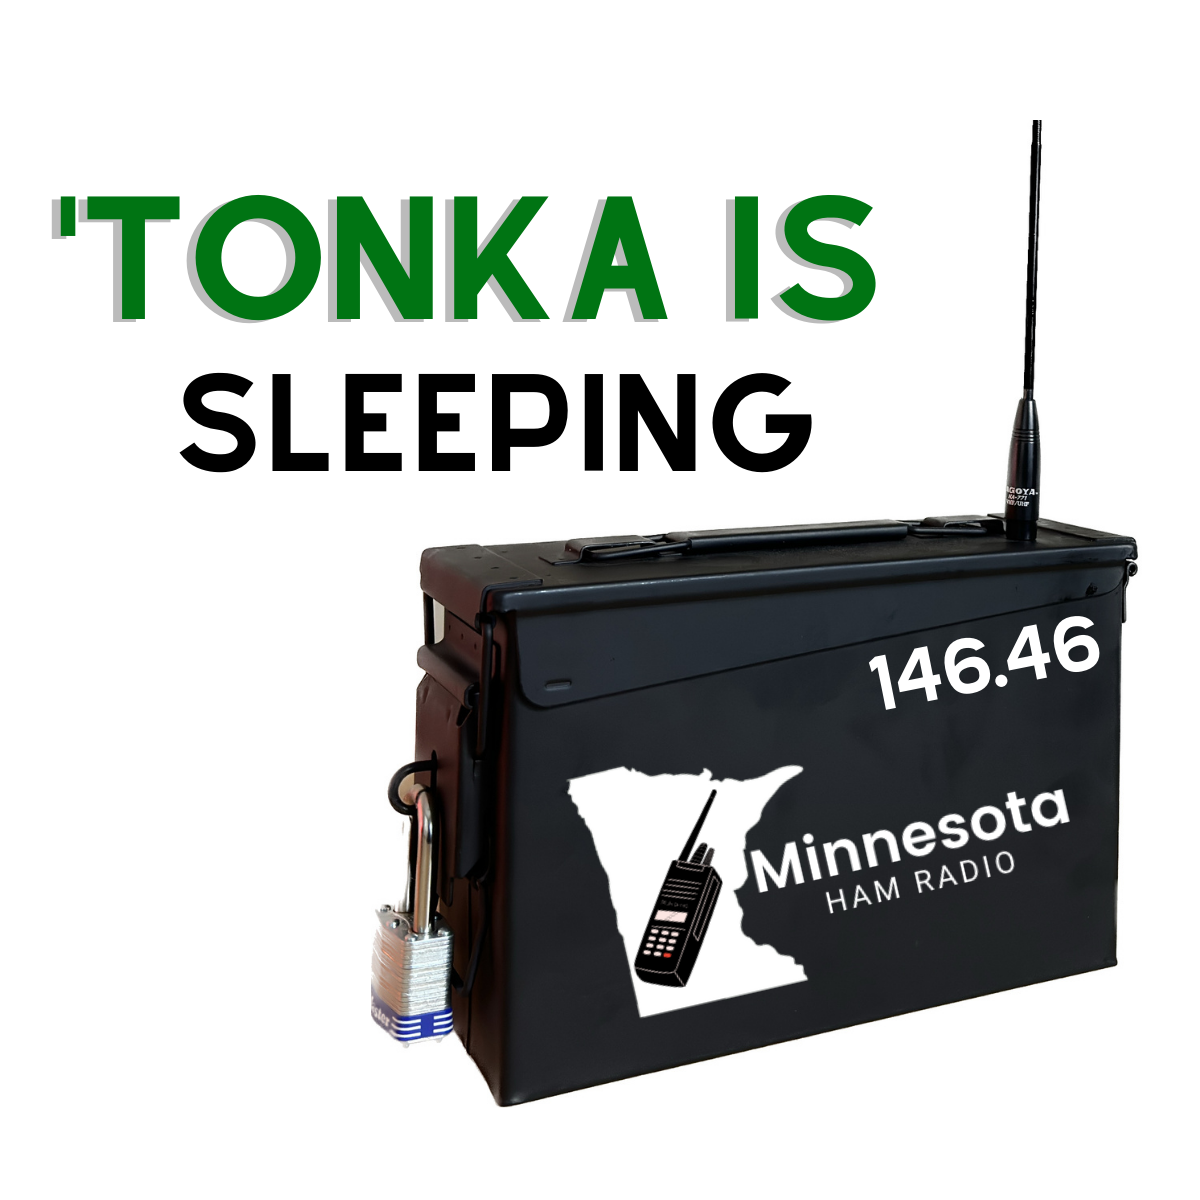 Minnesota Ham Radio fox transmitter named Tonka